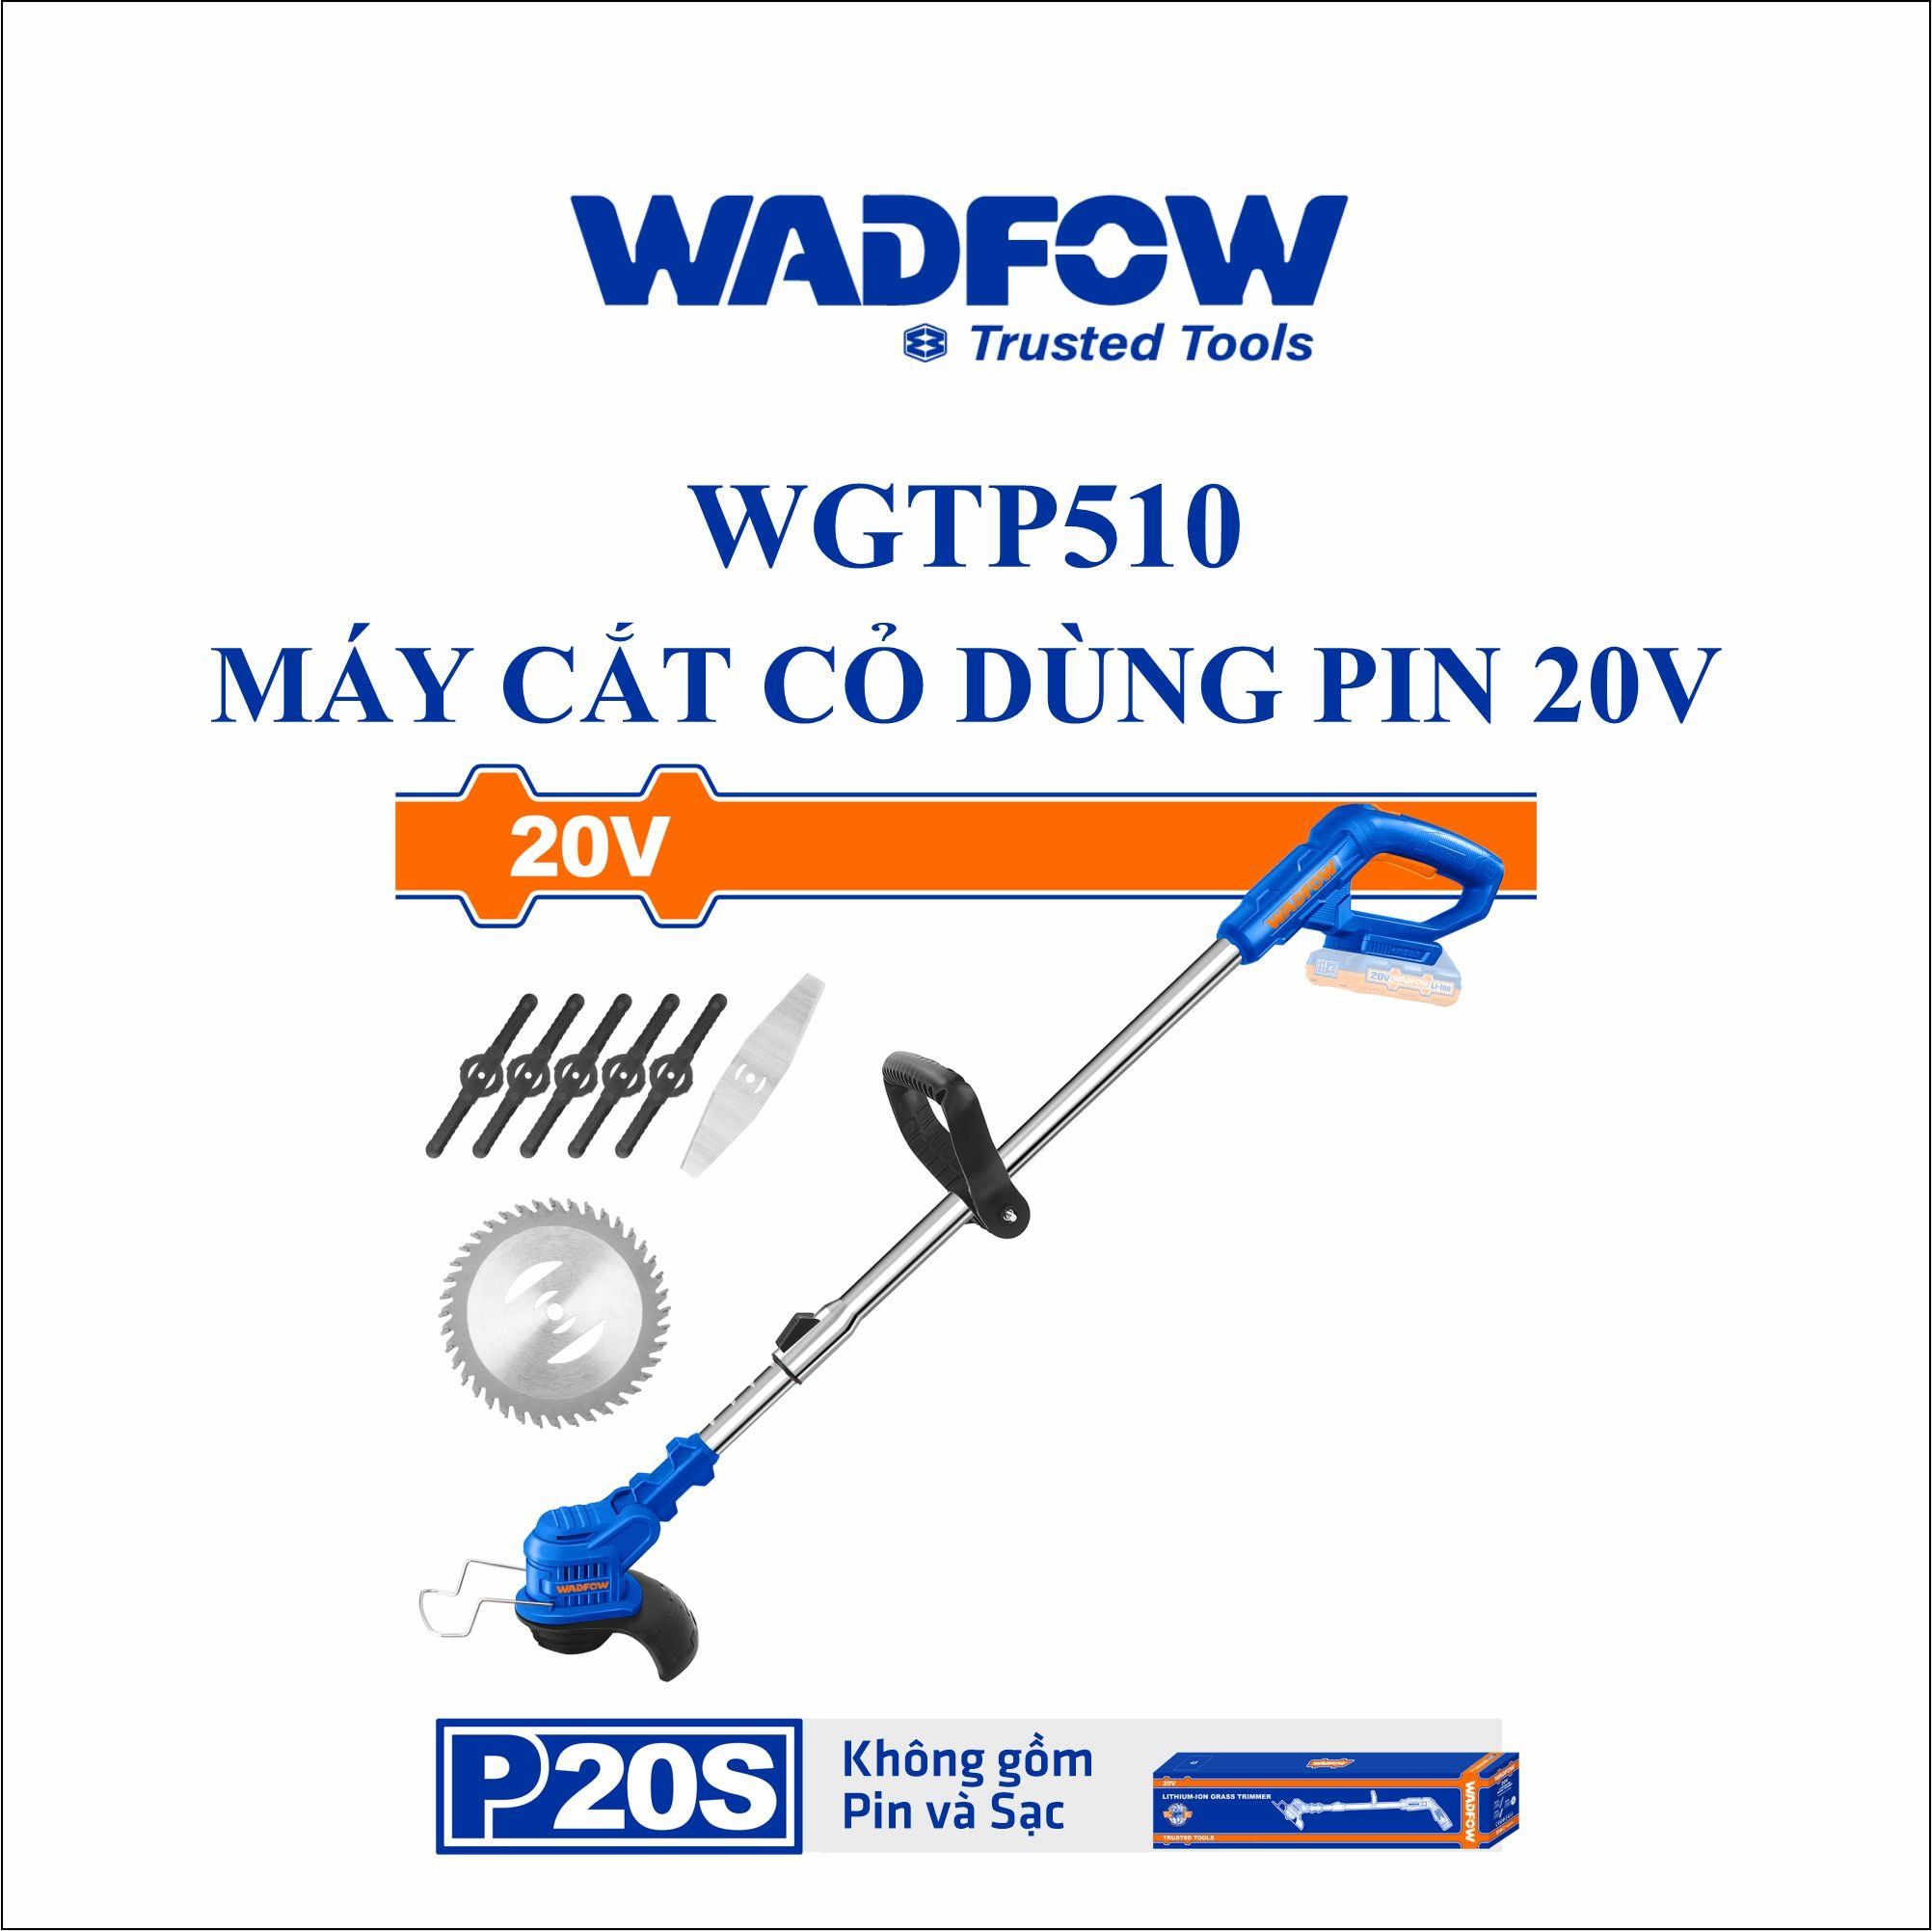  Máy cắt cỏ dùng pin 20V WADFOW WGTP510 (Solo) 